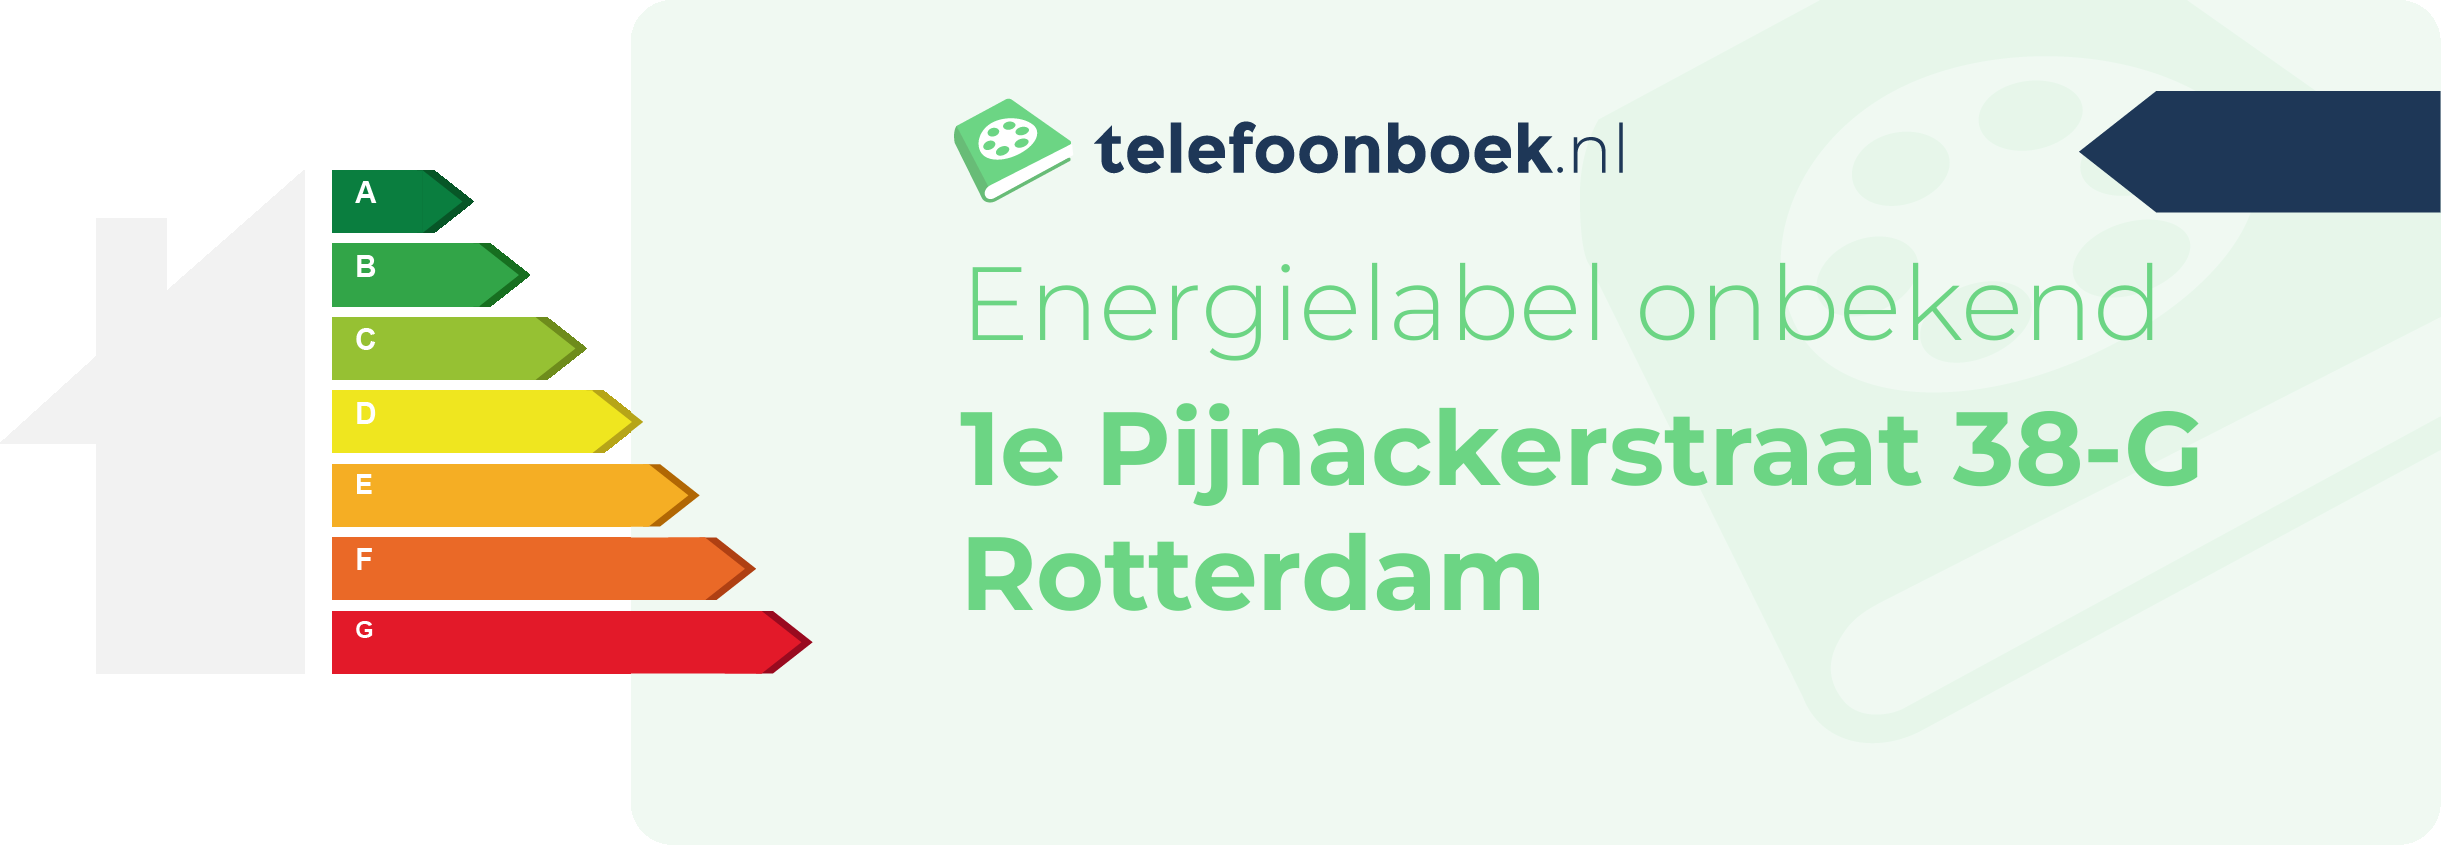 Energielabel 1e Pijnackerstraat 38-G Rotterdam